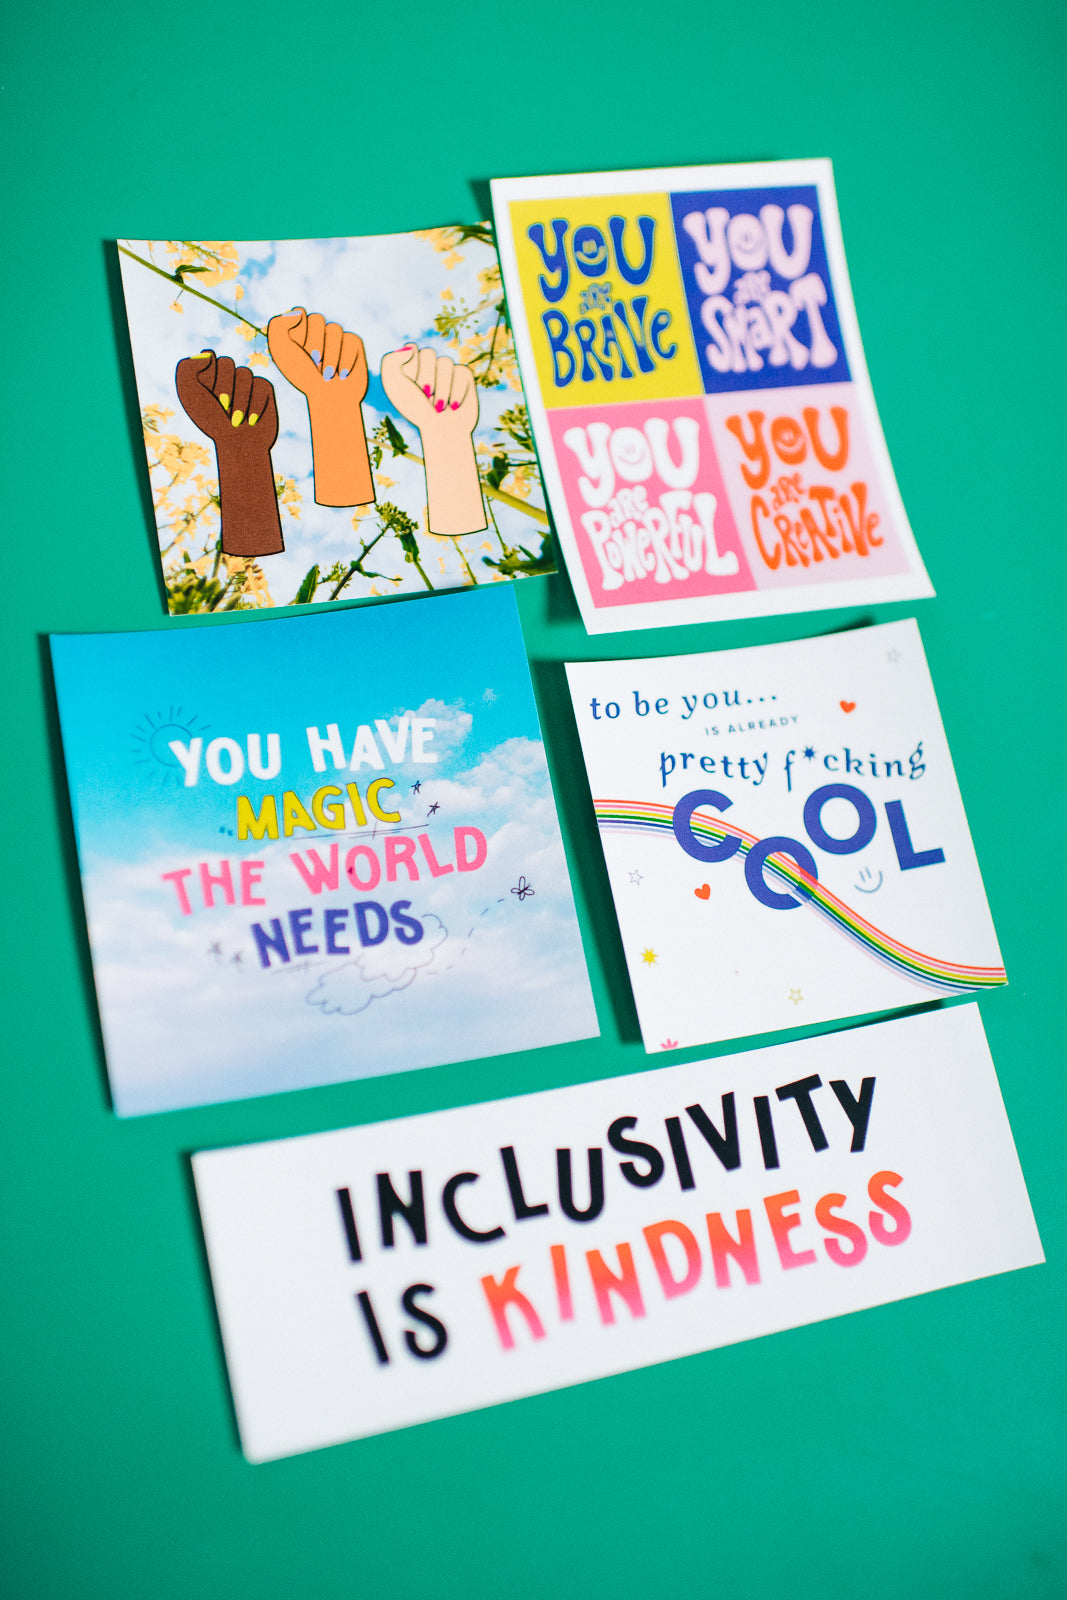 Inclusivity & Kindness Stickers